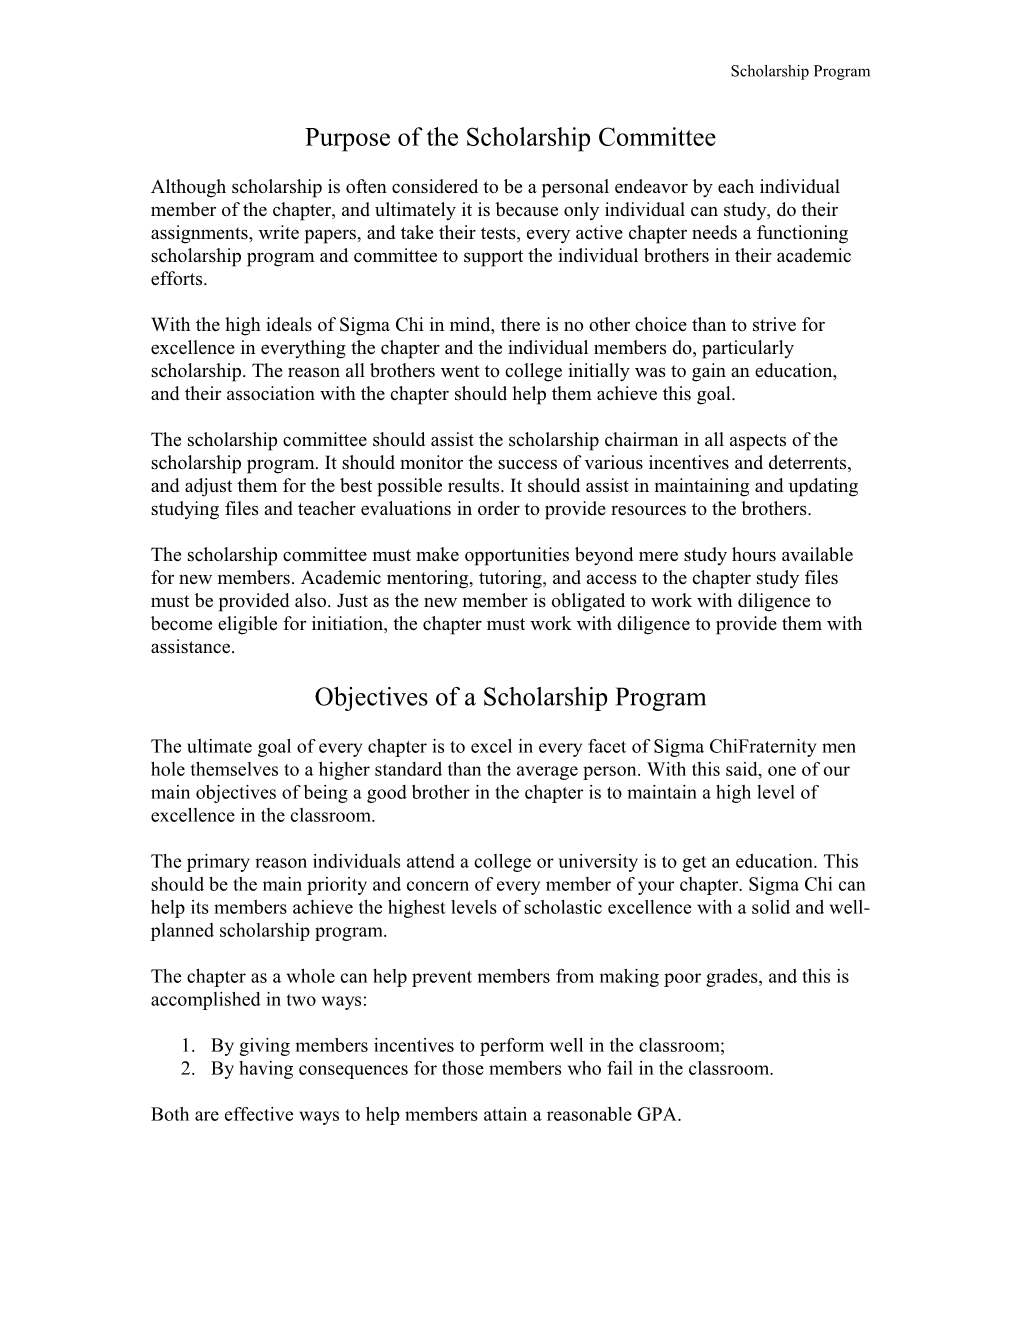 Purpose of the Scholarship Committee